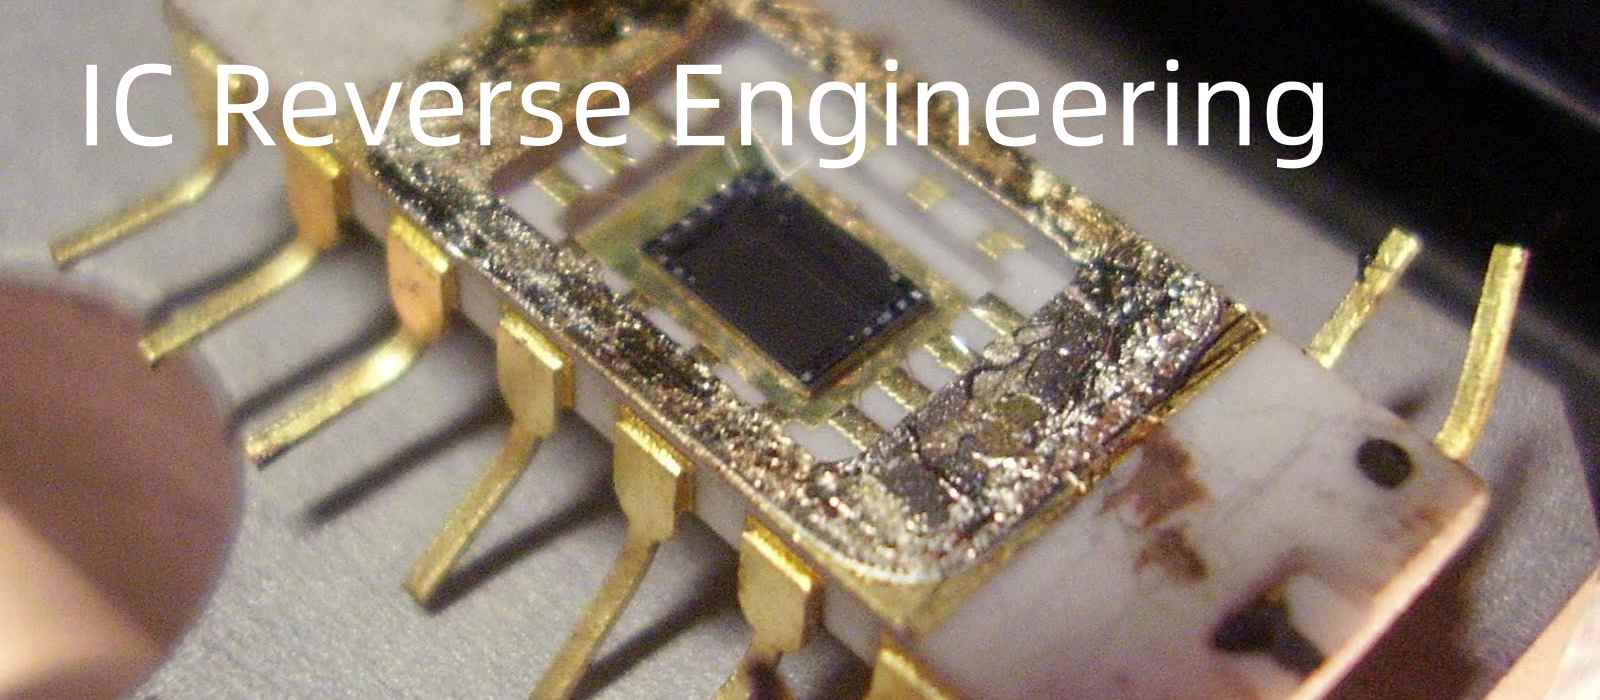 IC Reverse Engineering